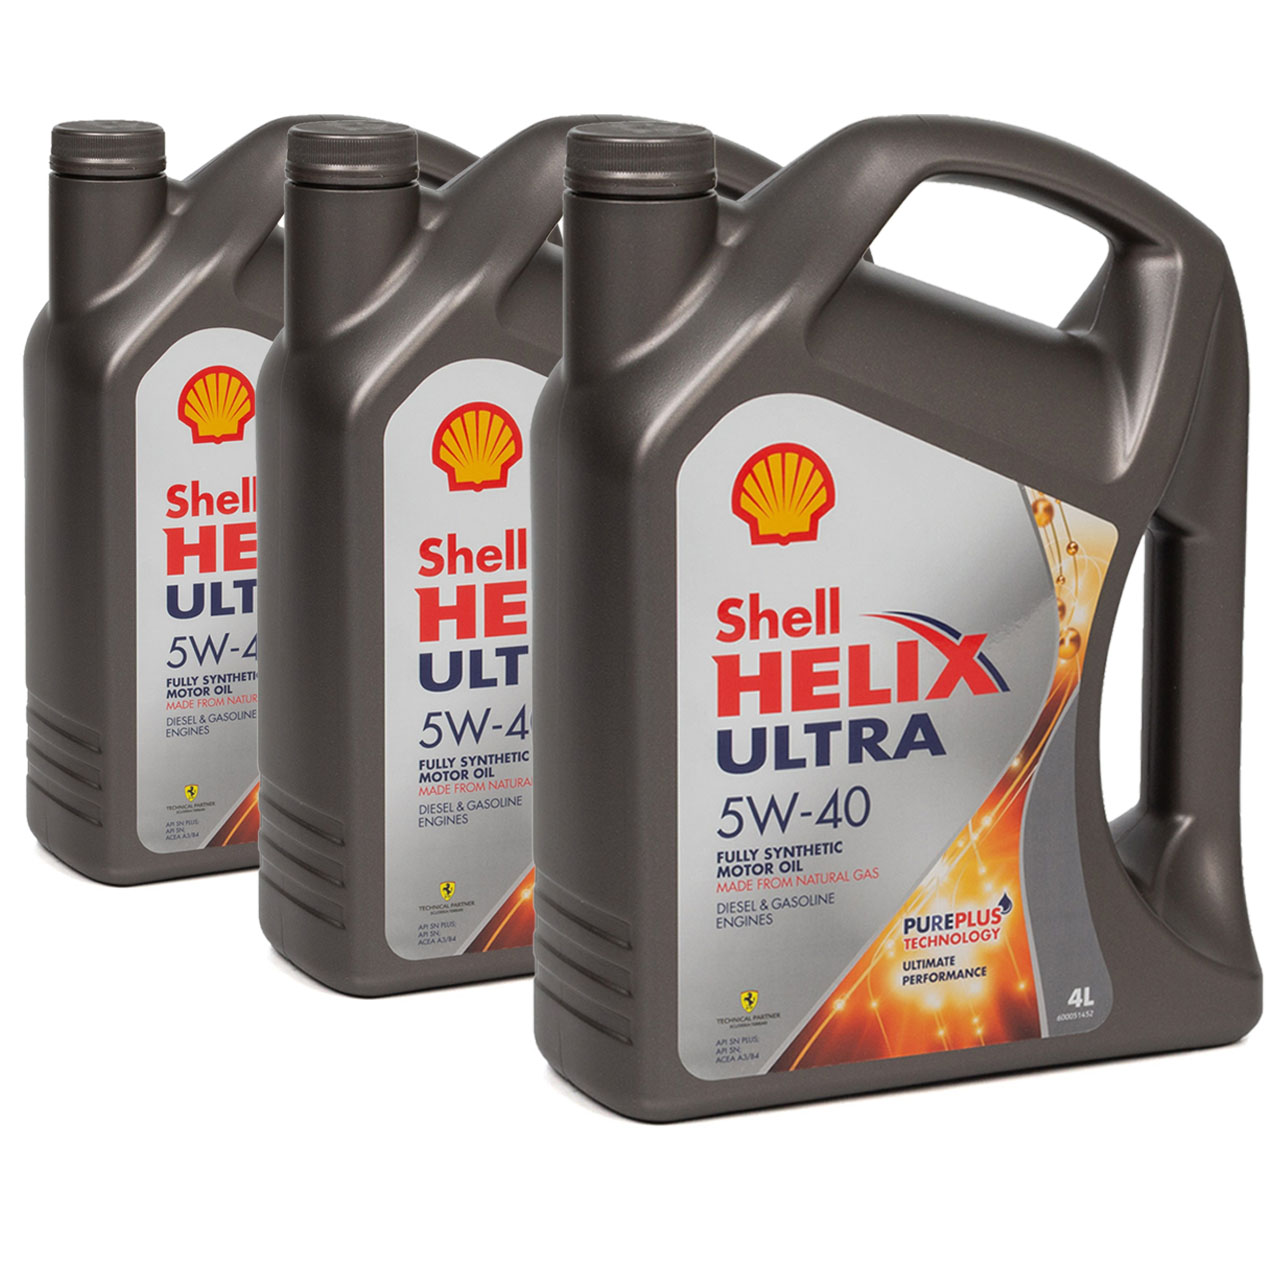 SHELL Motoröl Öl HELIX ULTRA 5W-40 5W40 MB 226/229.5 VW 502/505.00 - 12 Liter